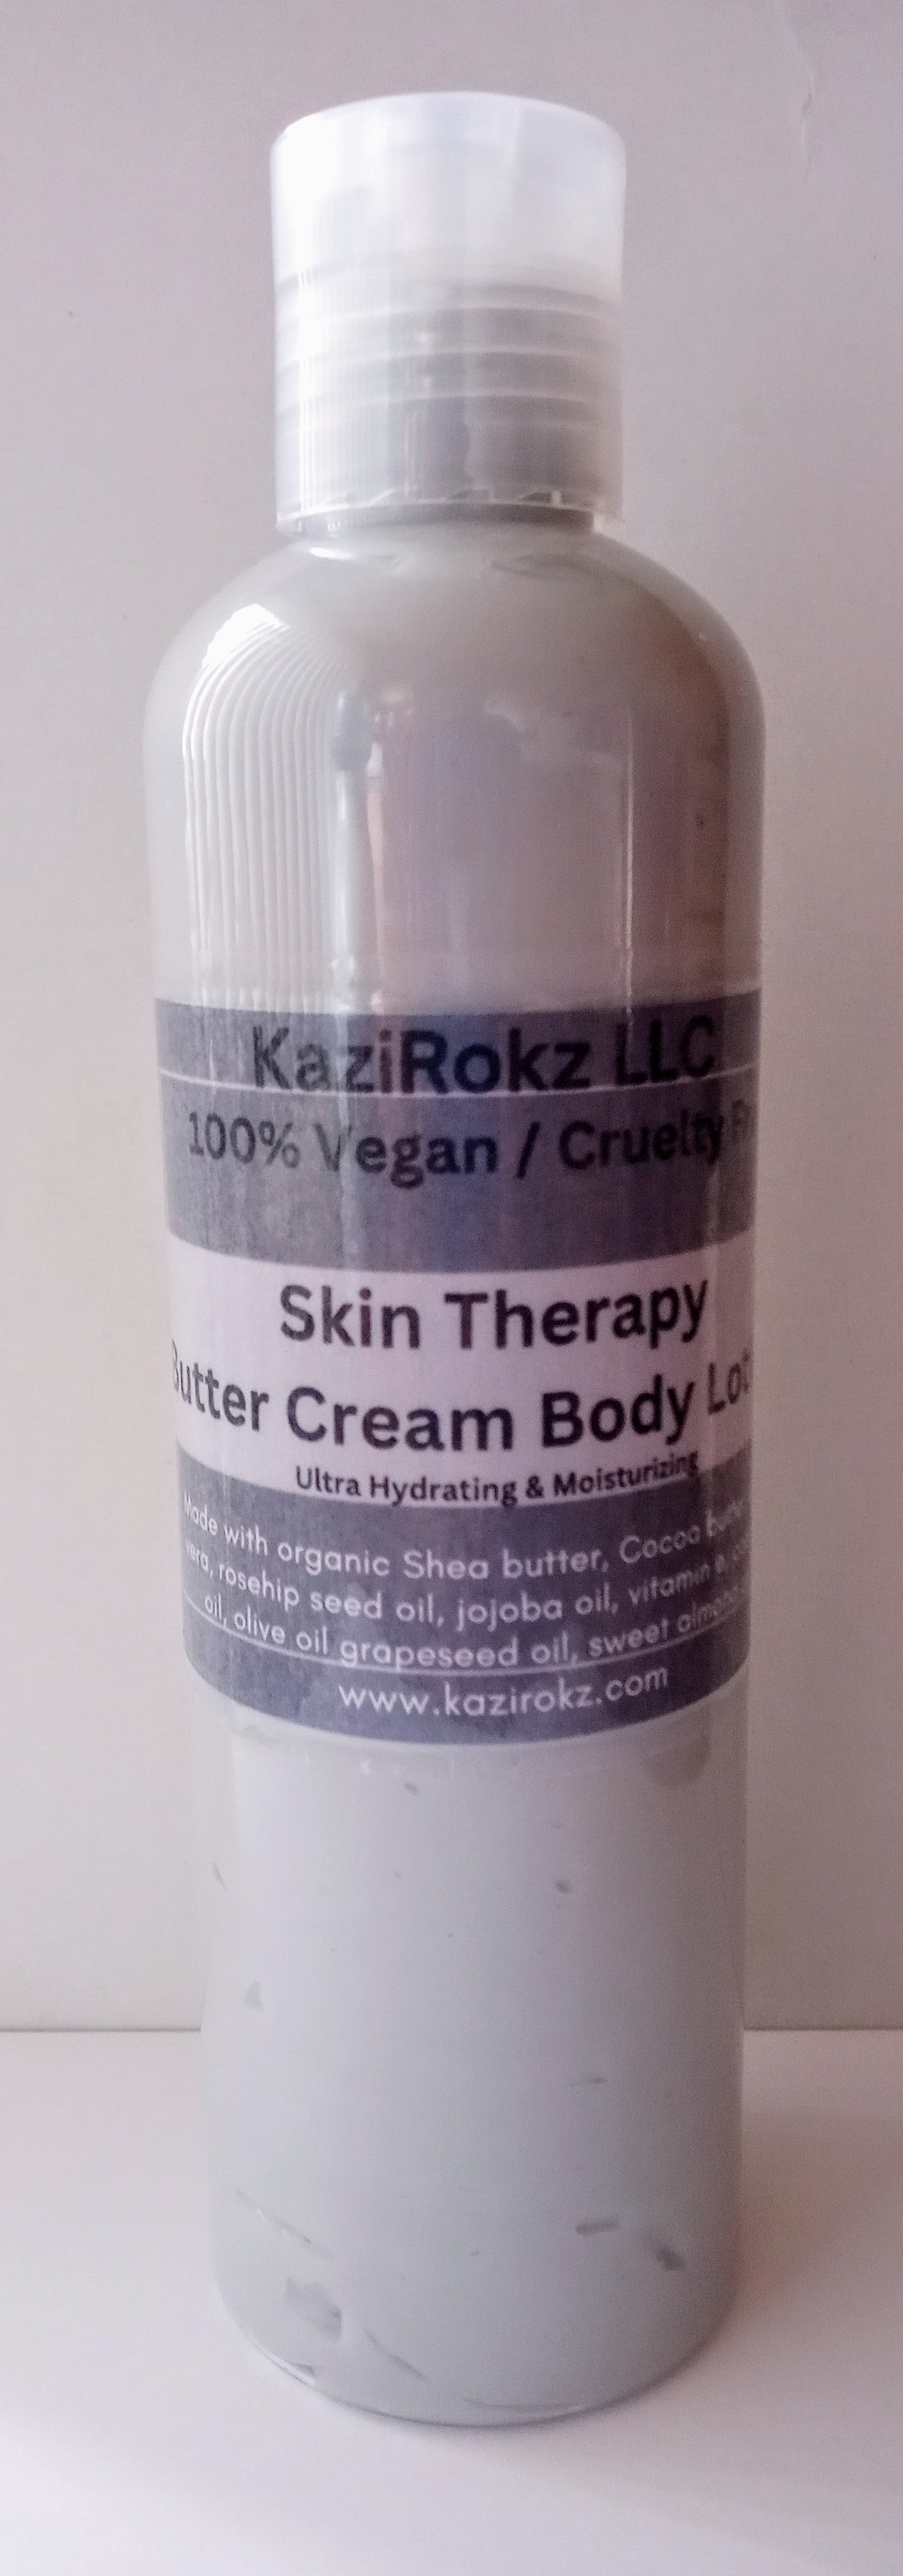 Skin Therapy Butter Cream Body Lotion (100% Vegan / Cruelty Free)